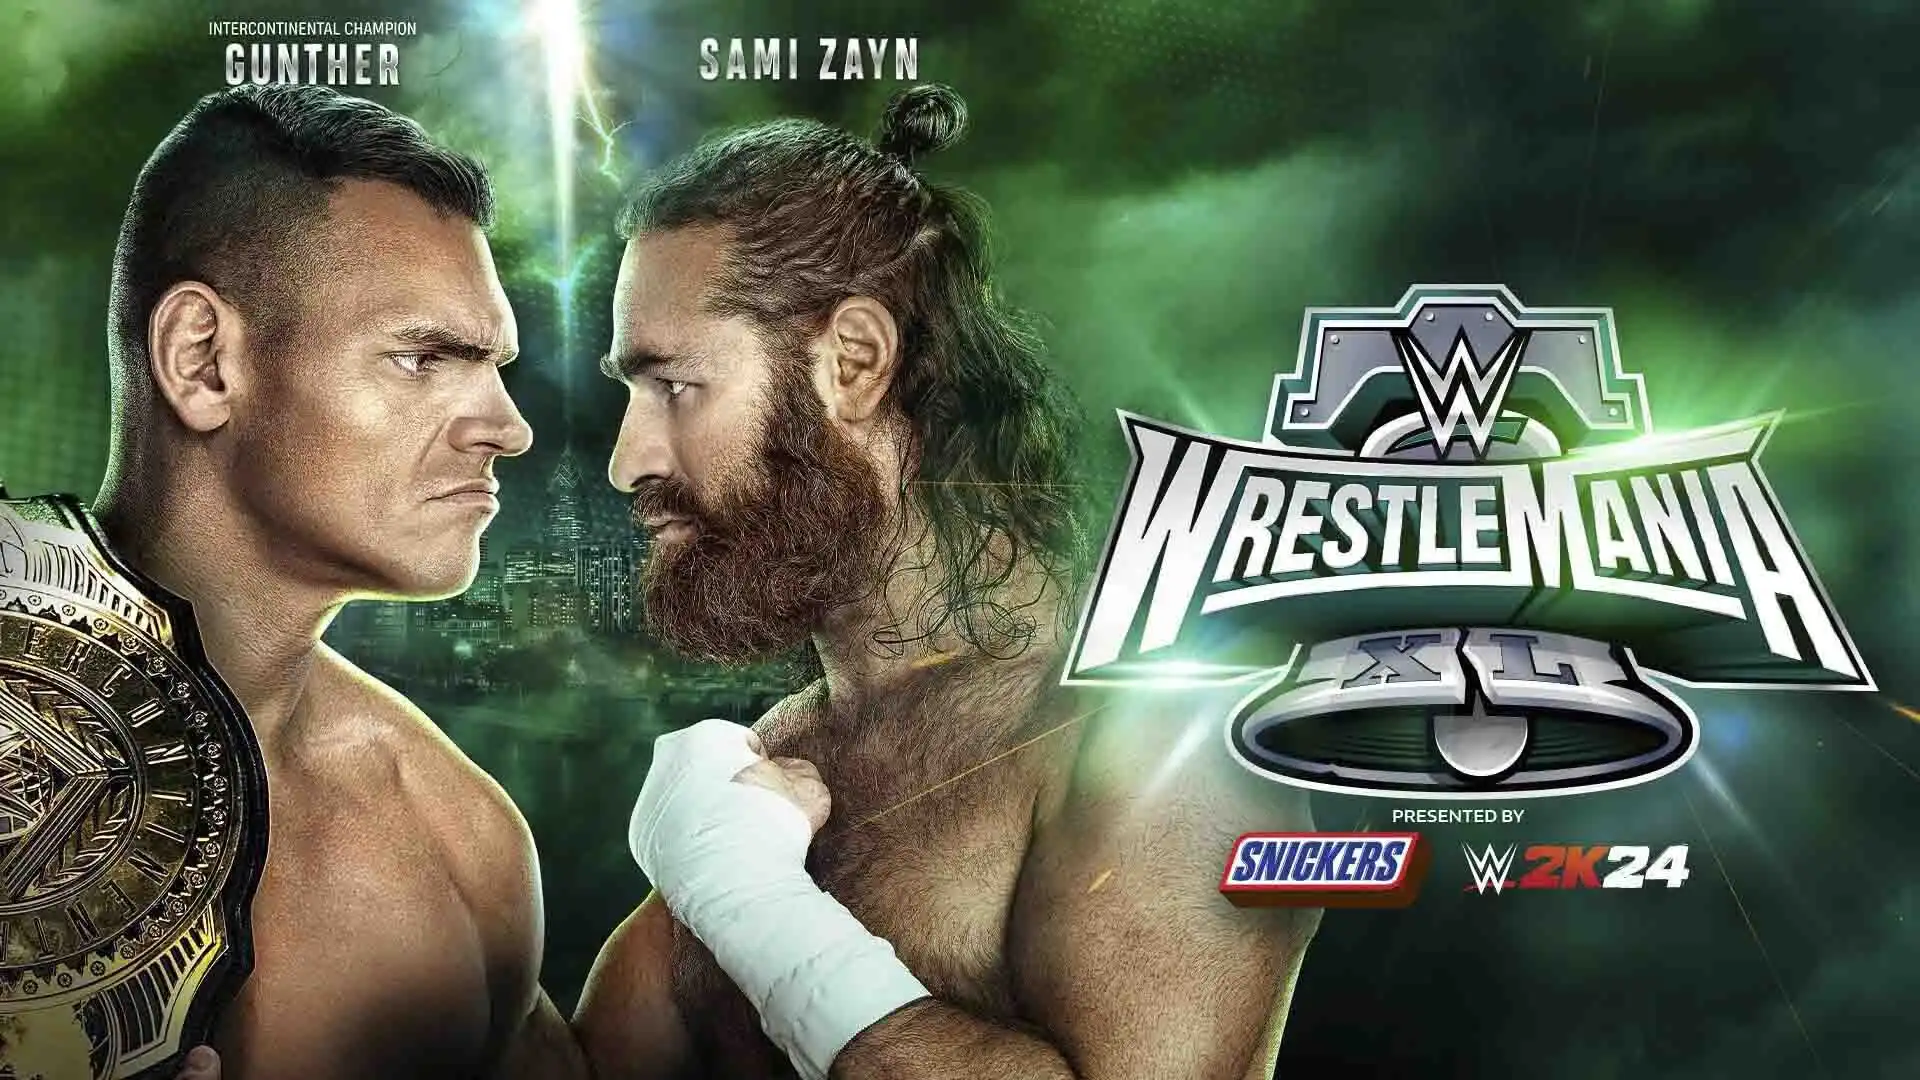 Intercontinental Championship - Gunther vs Sami Zayn (Night 1):